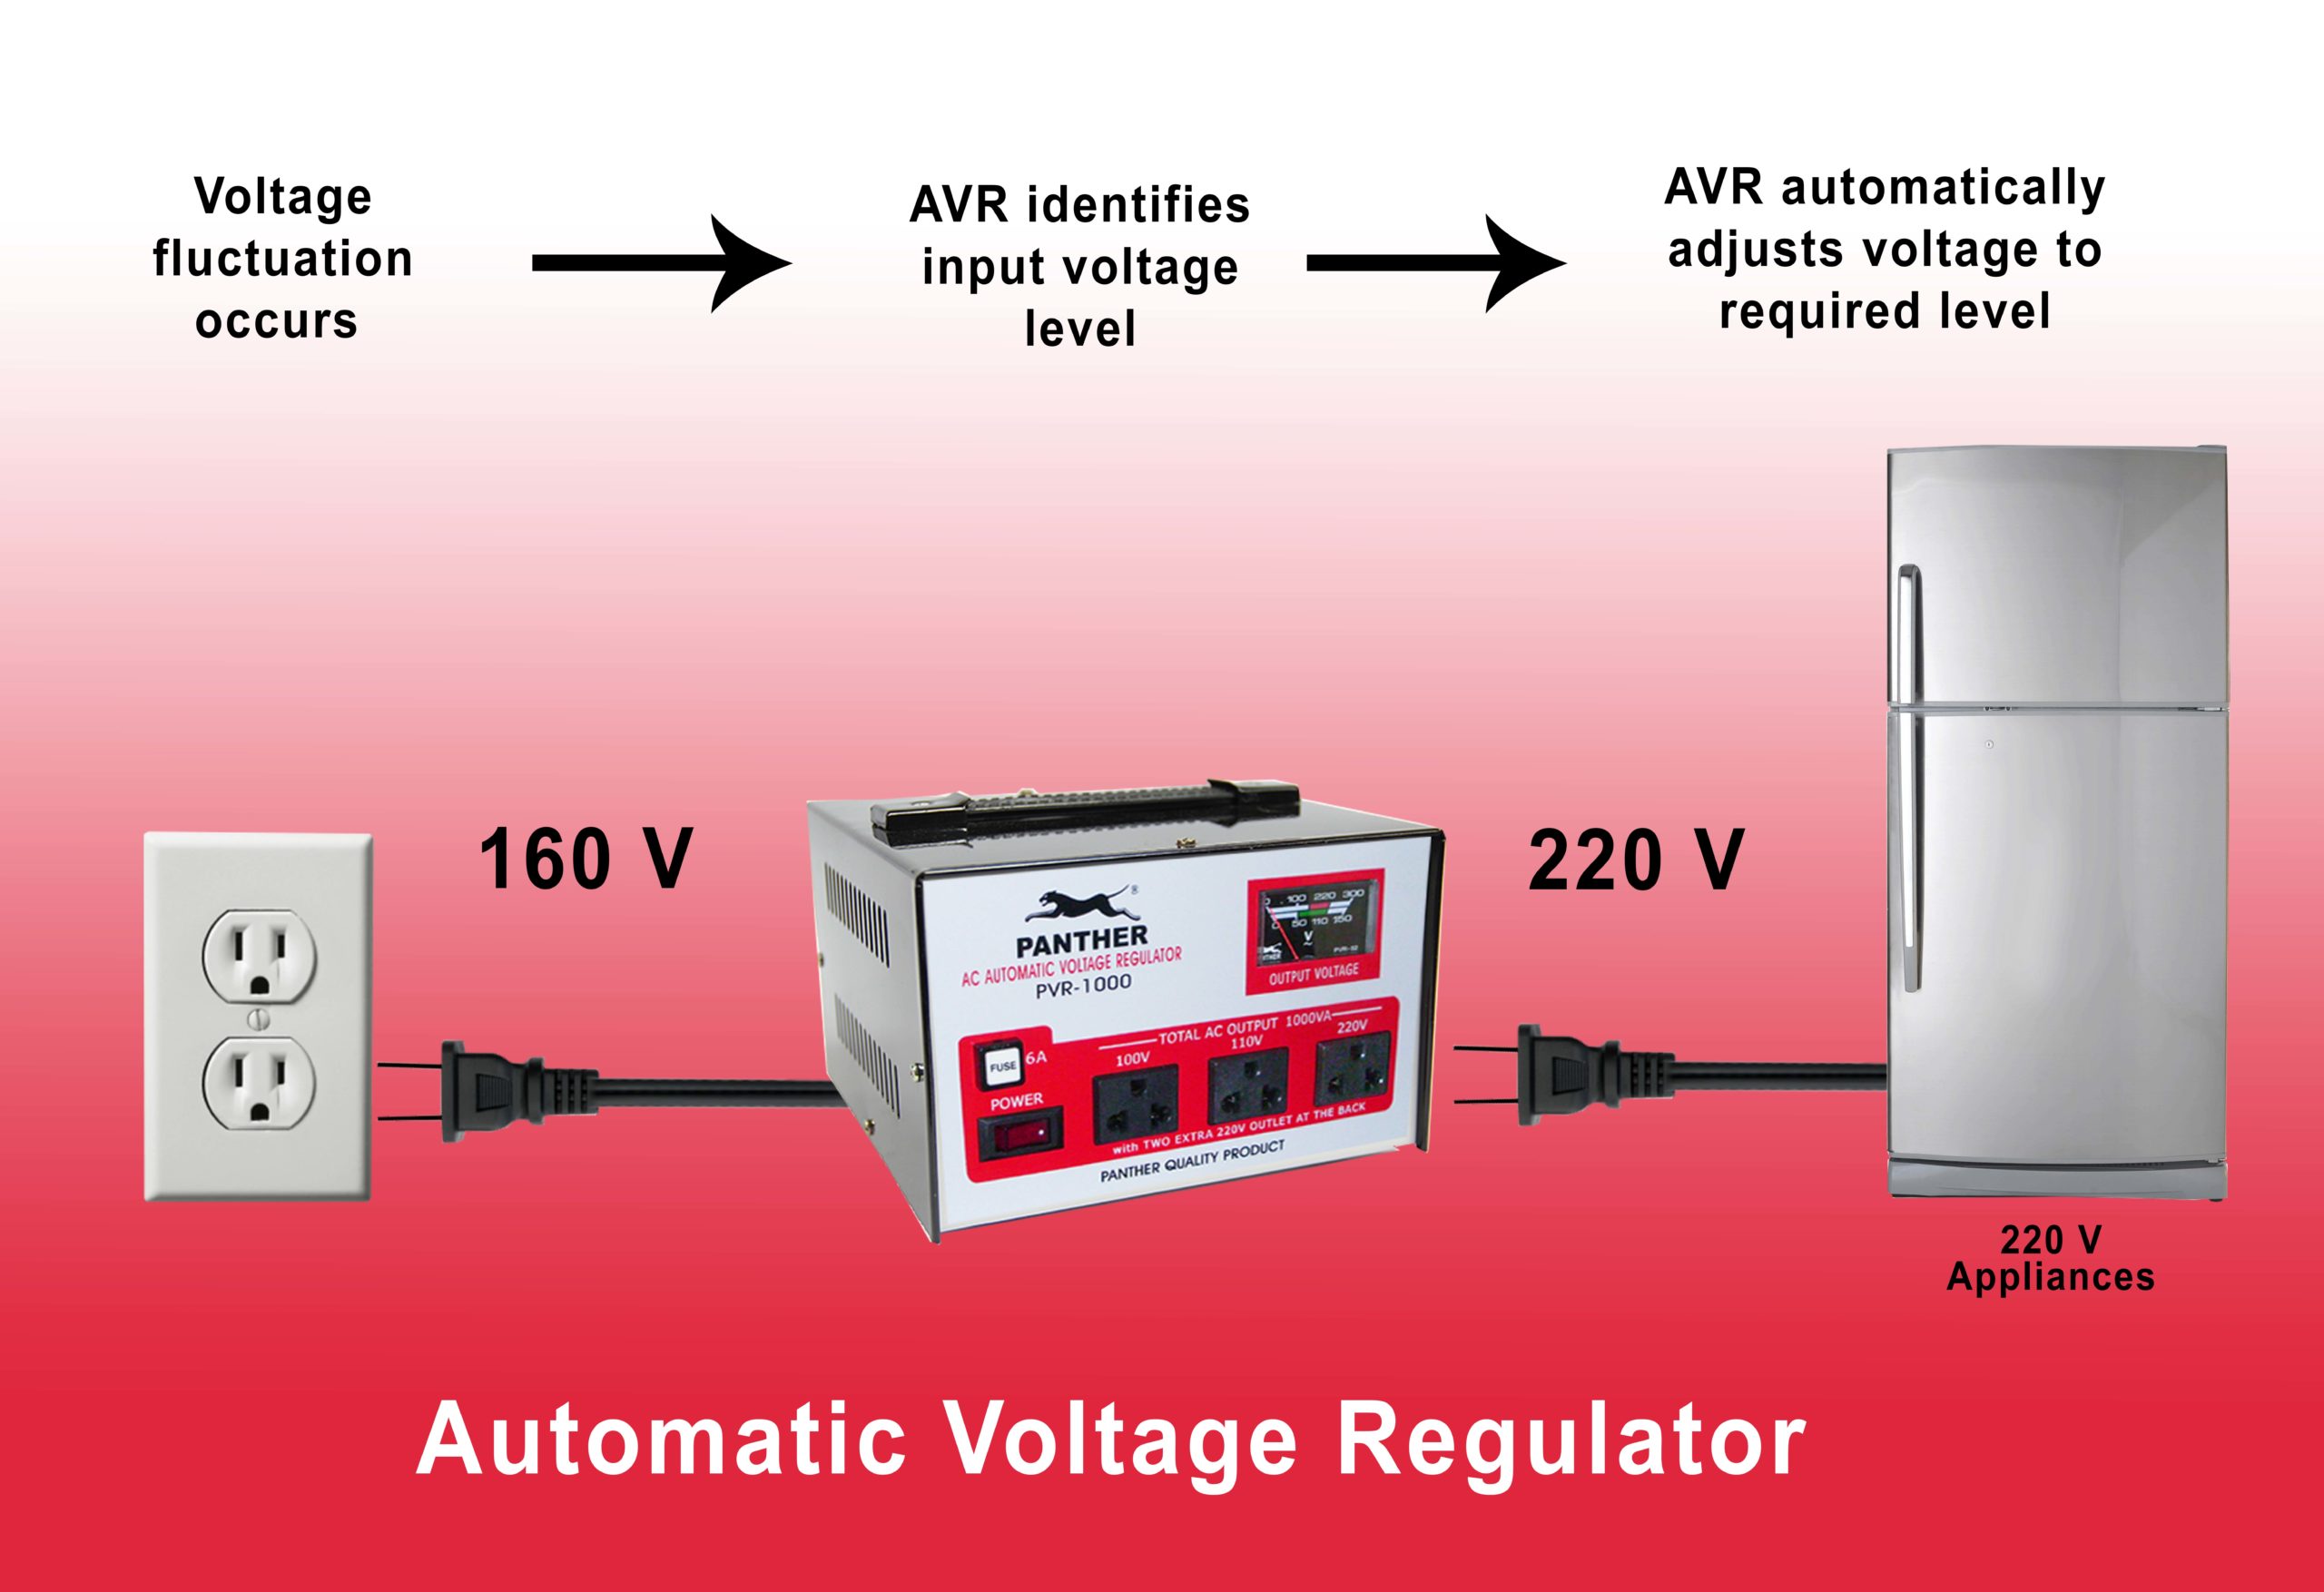 Benefits of an automatic voltage regulator (AVR)